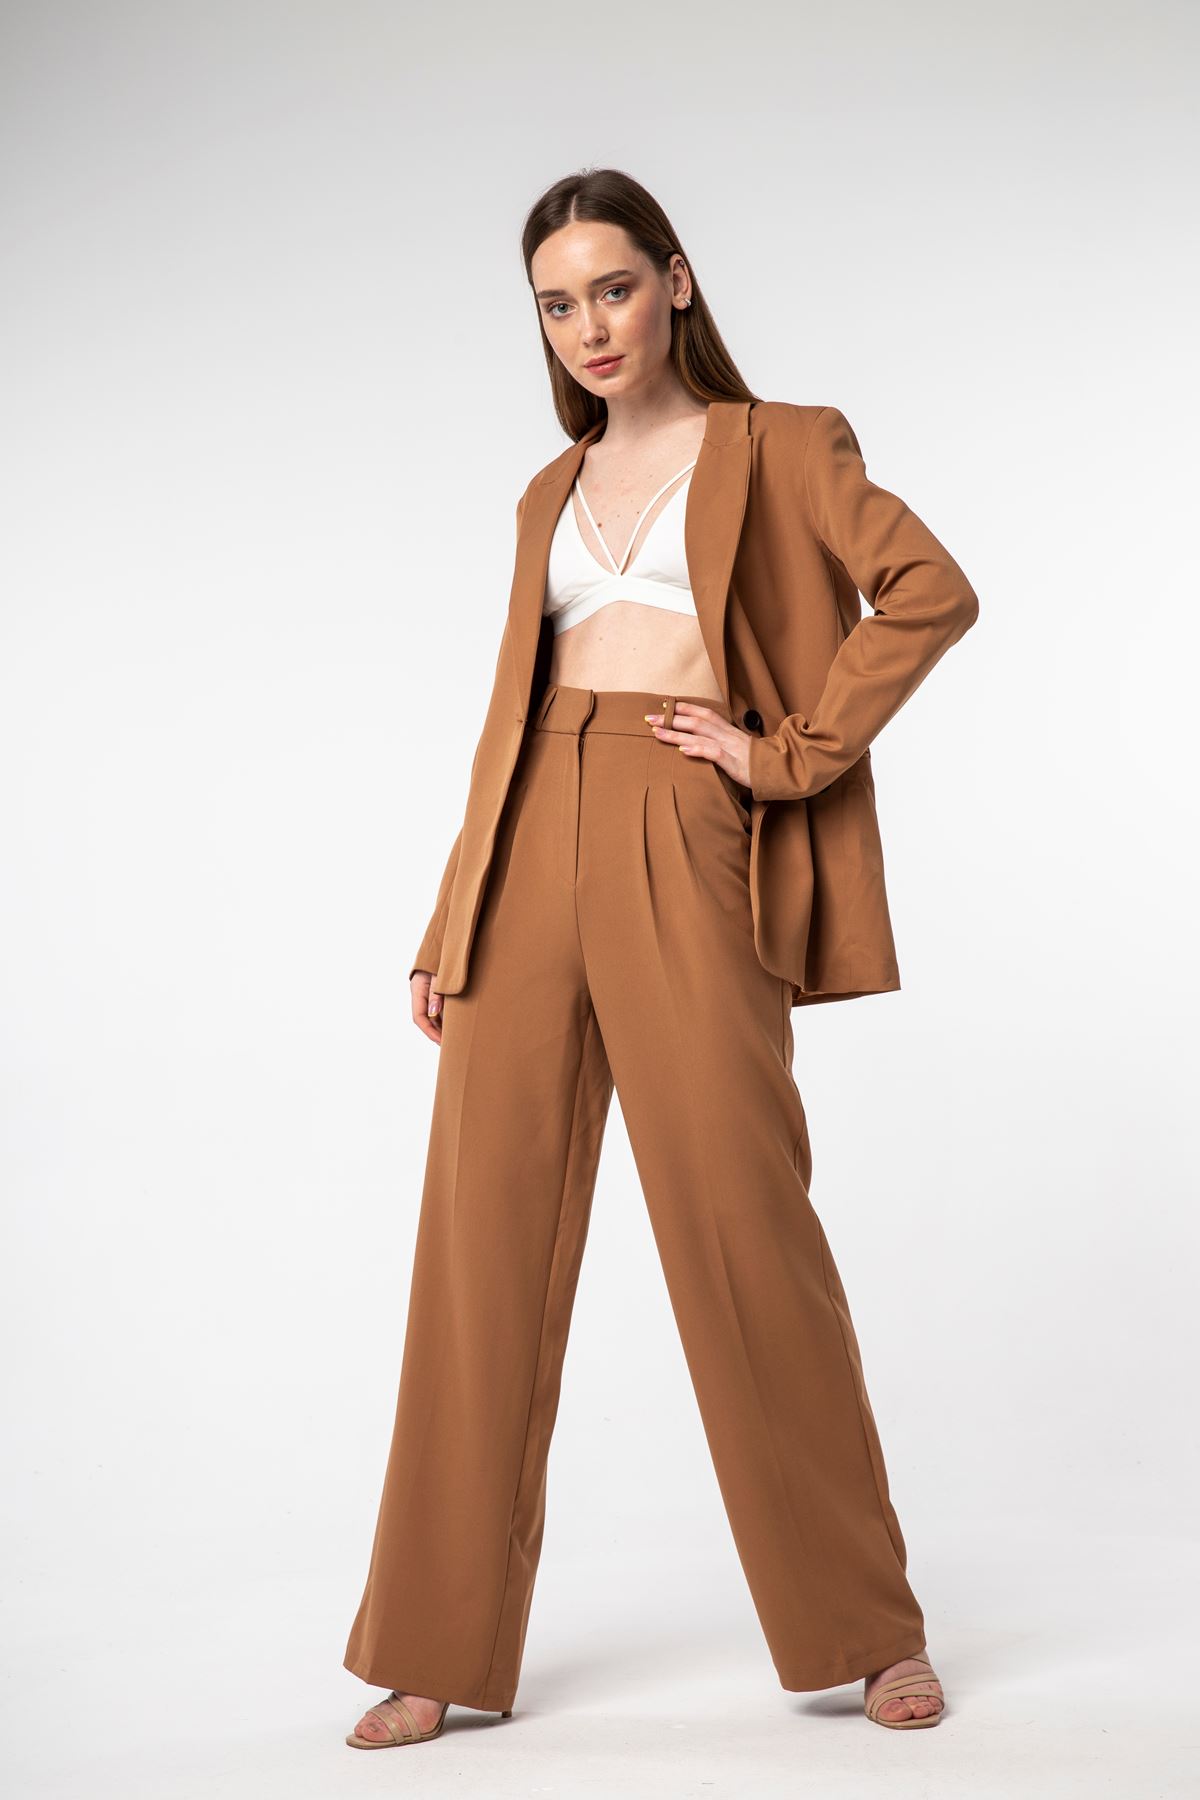 Atlas Fabric Revere Collar Below Hip Classical Single Button Women Jacket - Brown